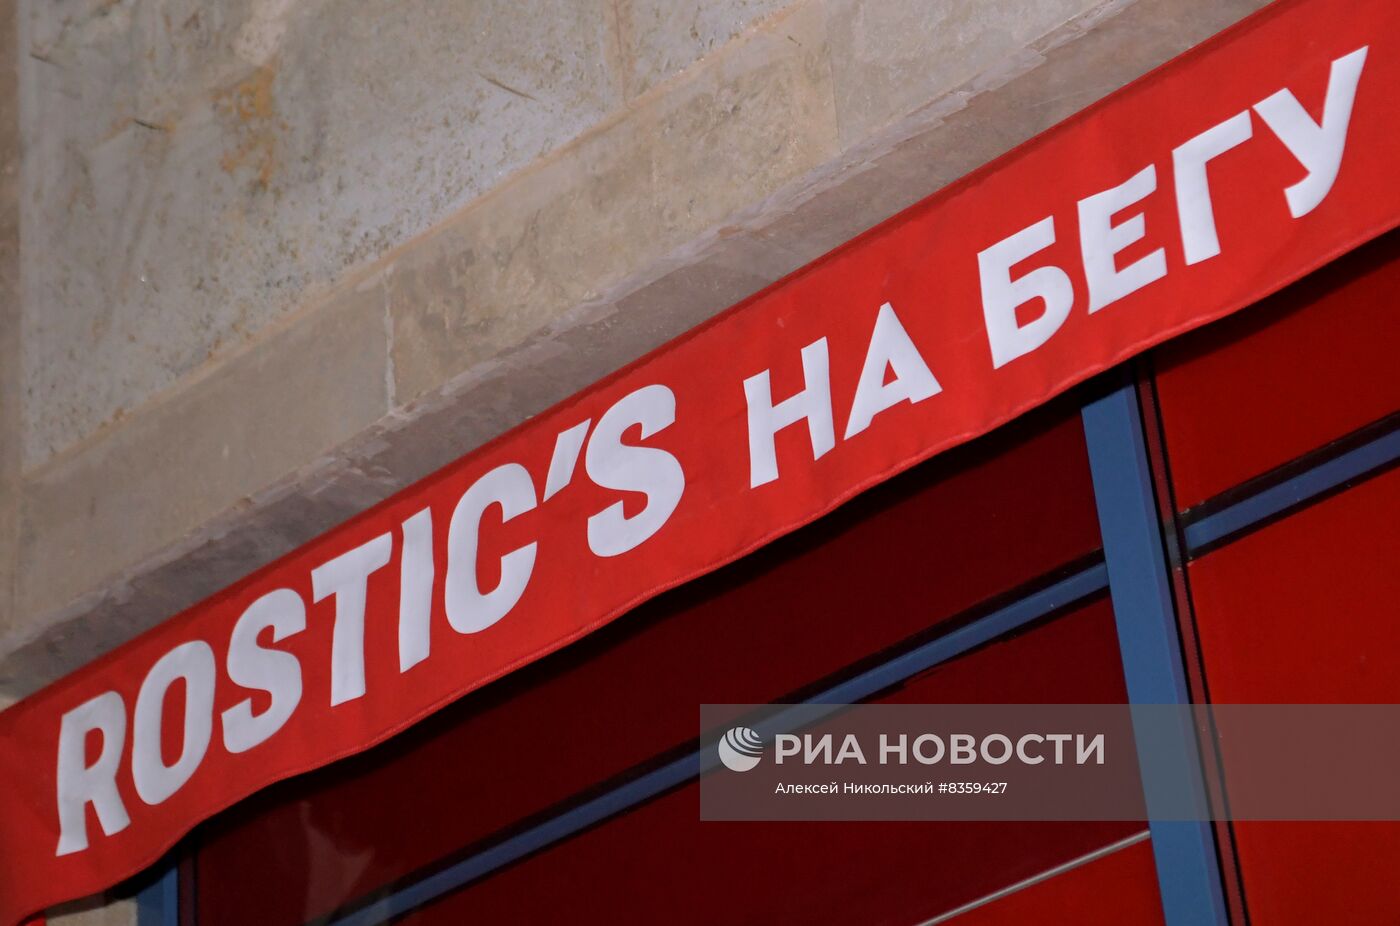 Рестораны KFC меняют вывески на Rostic's